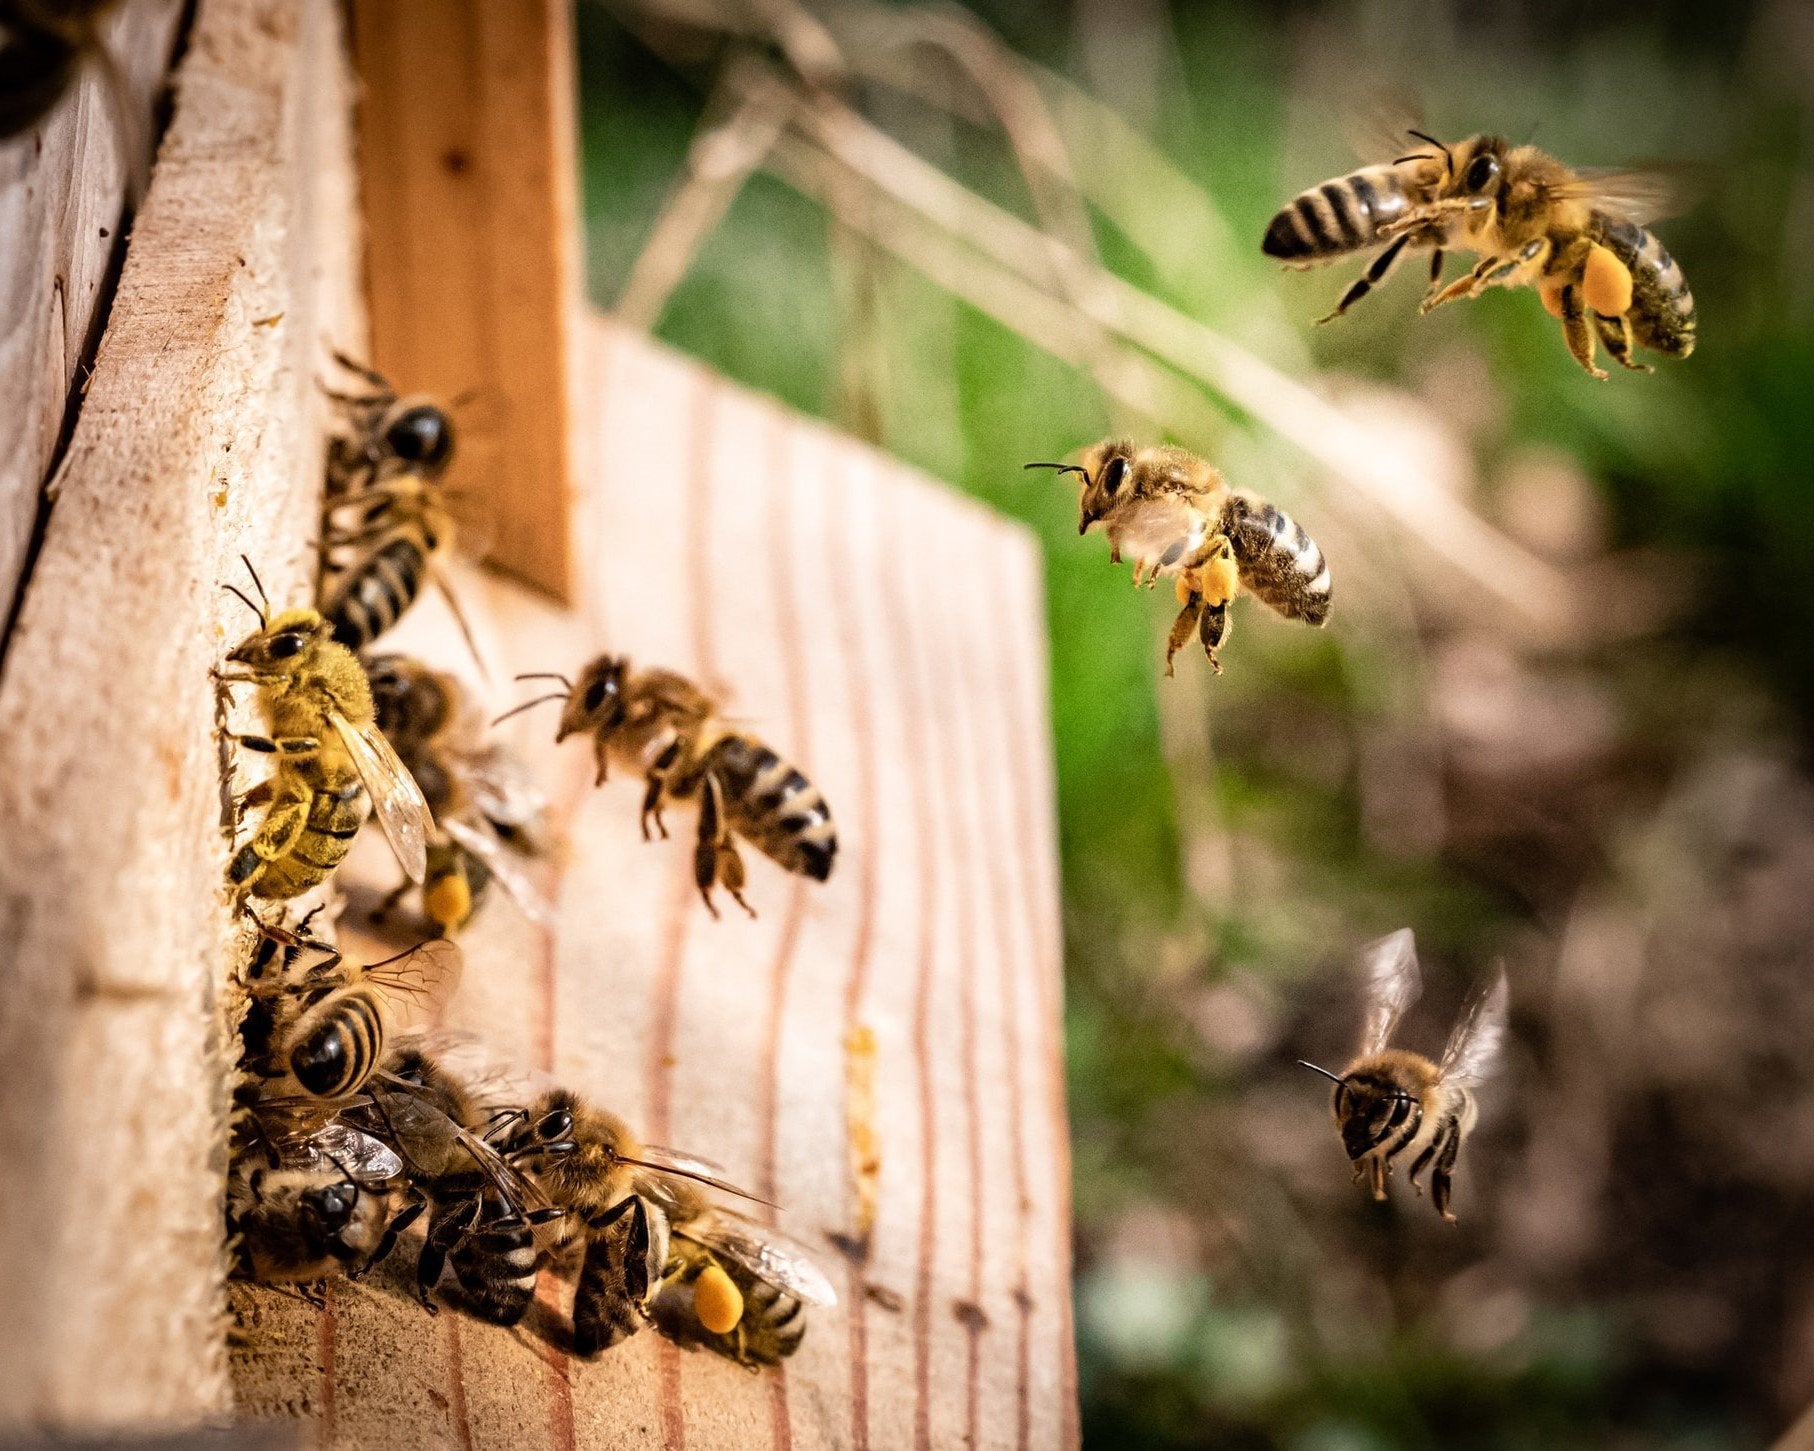 Protecting Pollinators: How to support bee habitats